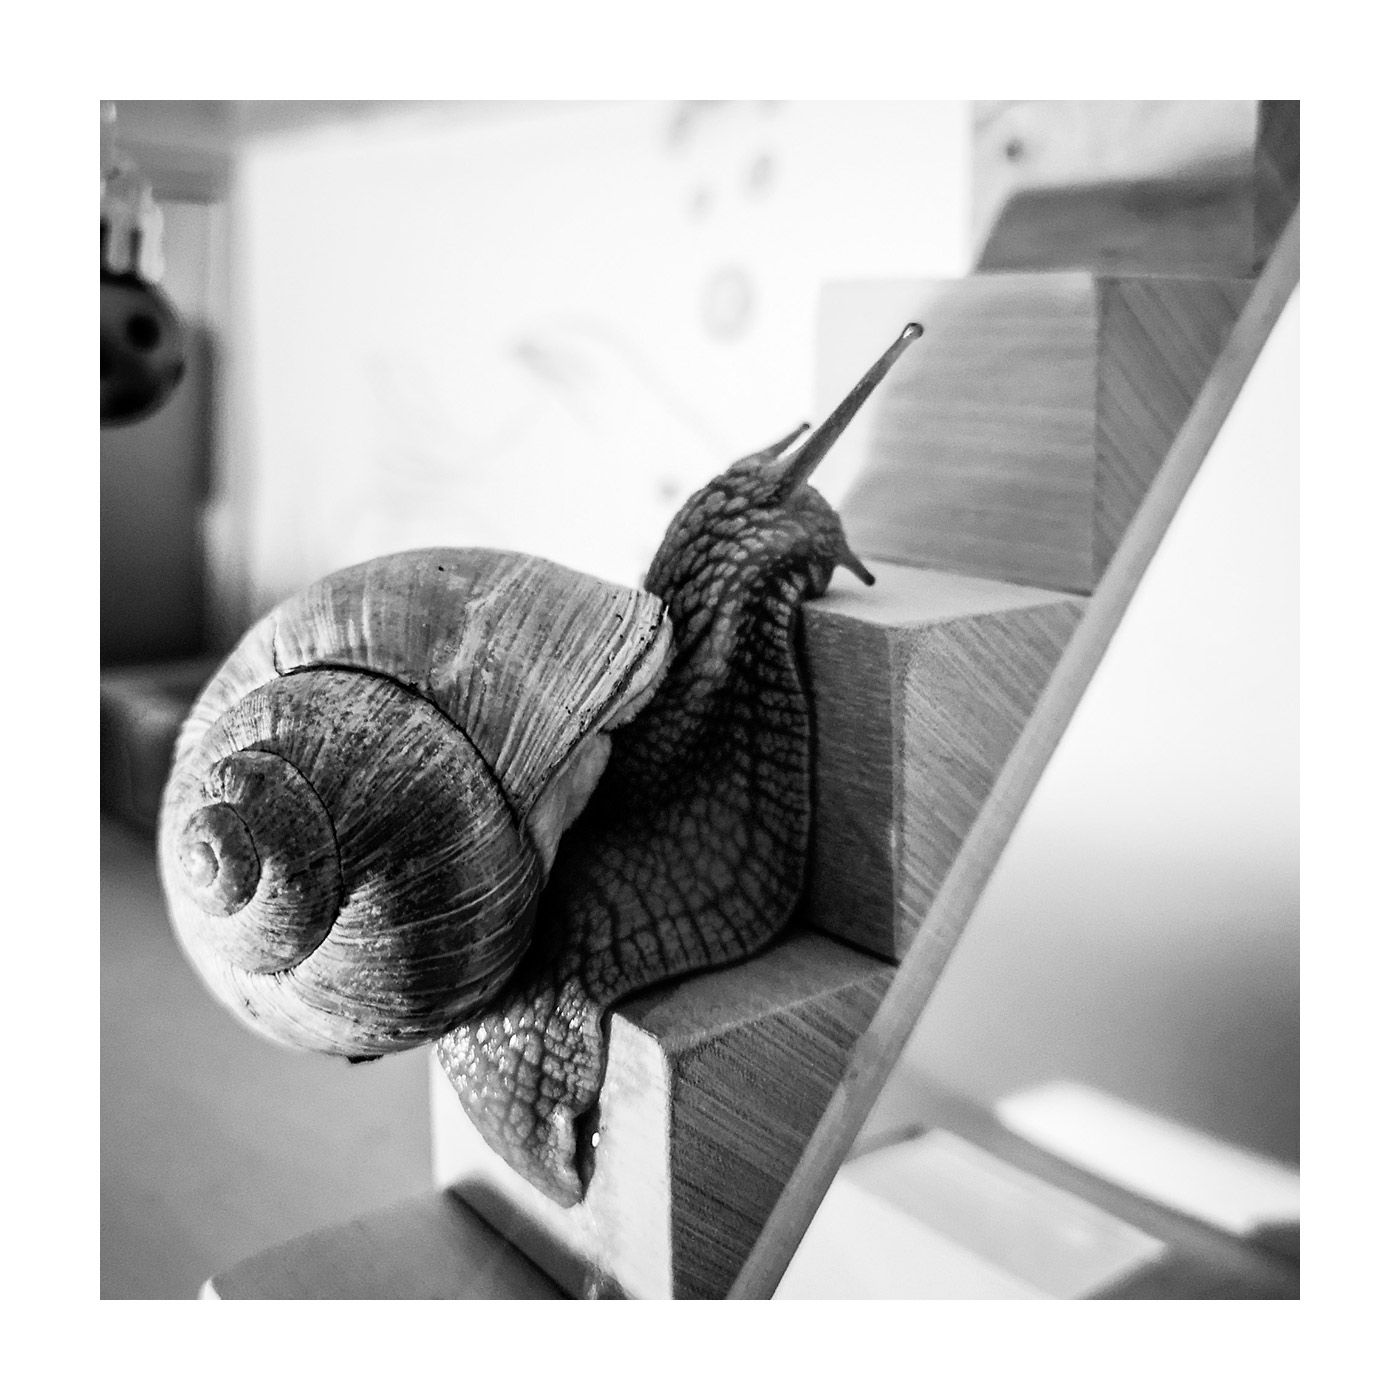 Snail's Silent Climb

#bnw #kersavond #urbanpresents #bnwphoto #blackandwhitephotography #monochrome #bnw #bw #blacknwhite #bnw_society #bnw_captures #bnw_life #photography #snail #animals